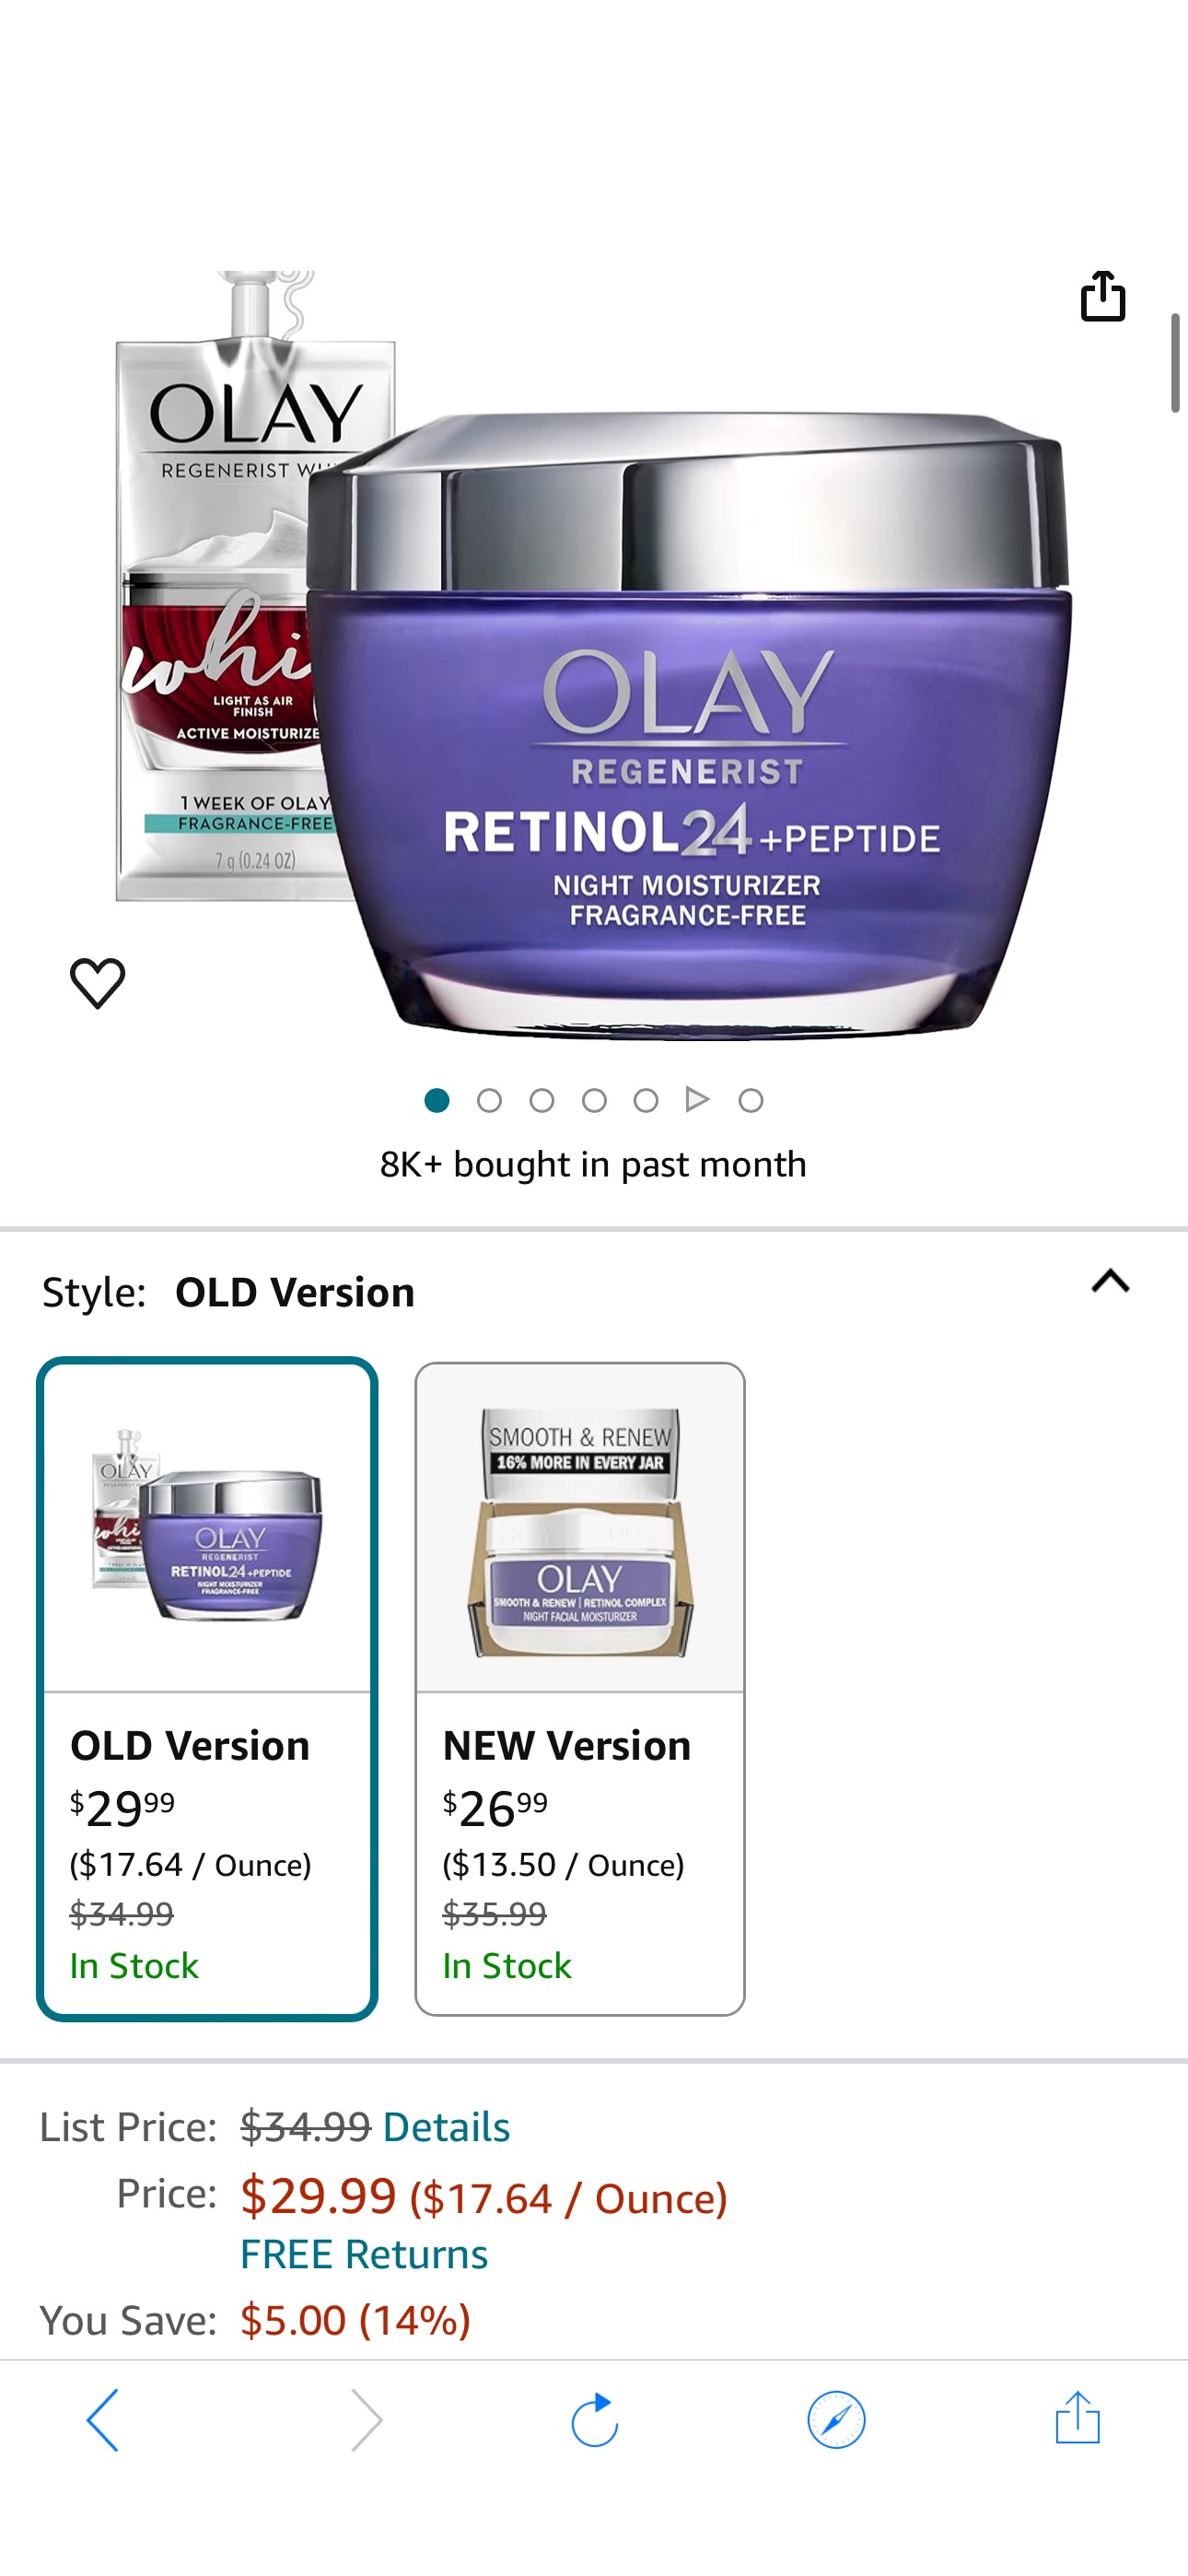 Amazon.com: Olay Regenerist Retinol Moisturizer, Retinol 24 Night Face Cream with Niacinamide, Anti-Wrinkle Fragrance-Free 1.7 oz, Includes Olay Whip Travel Size for Dry Skin : Beauty & Personal Care